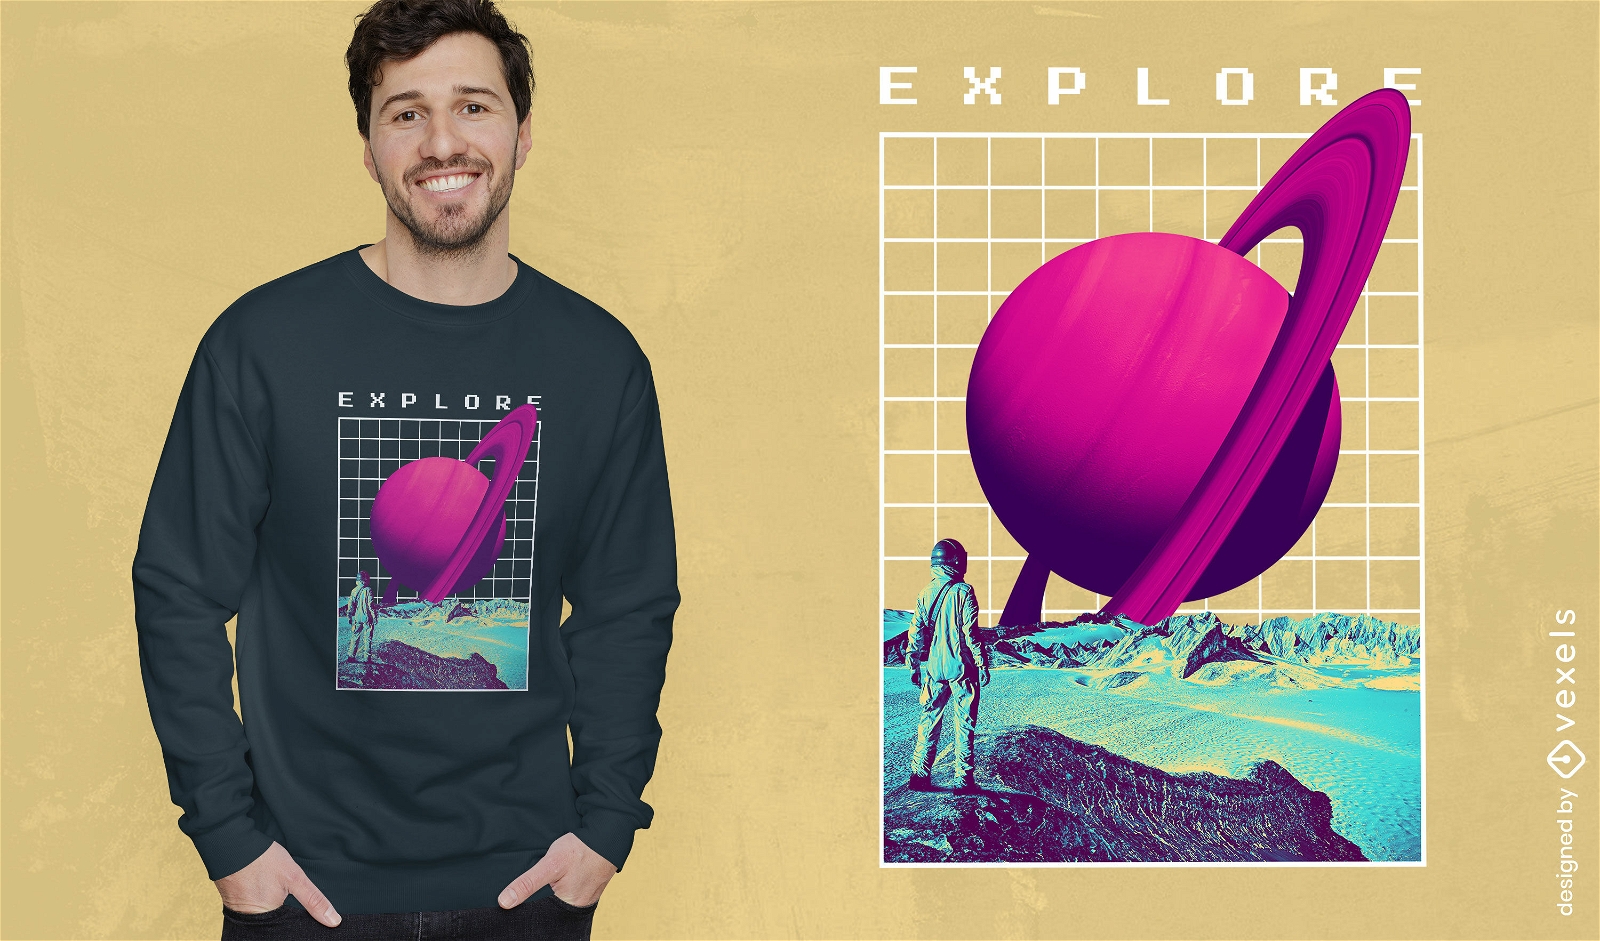 Saturn-Planeten-Vaporwave-T-Shirt-Design